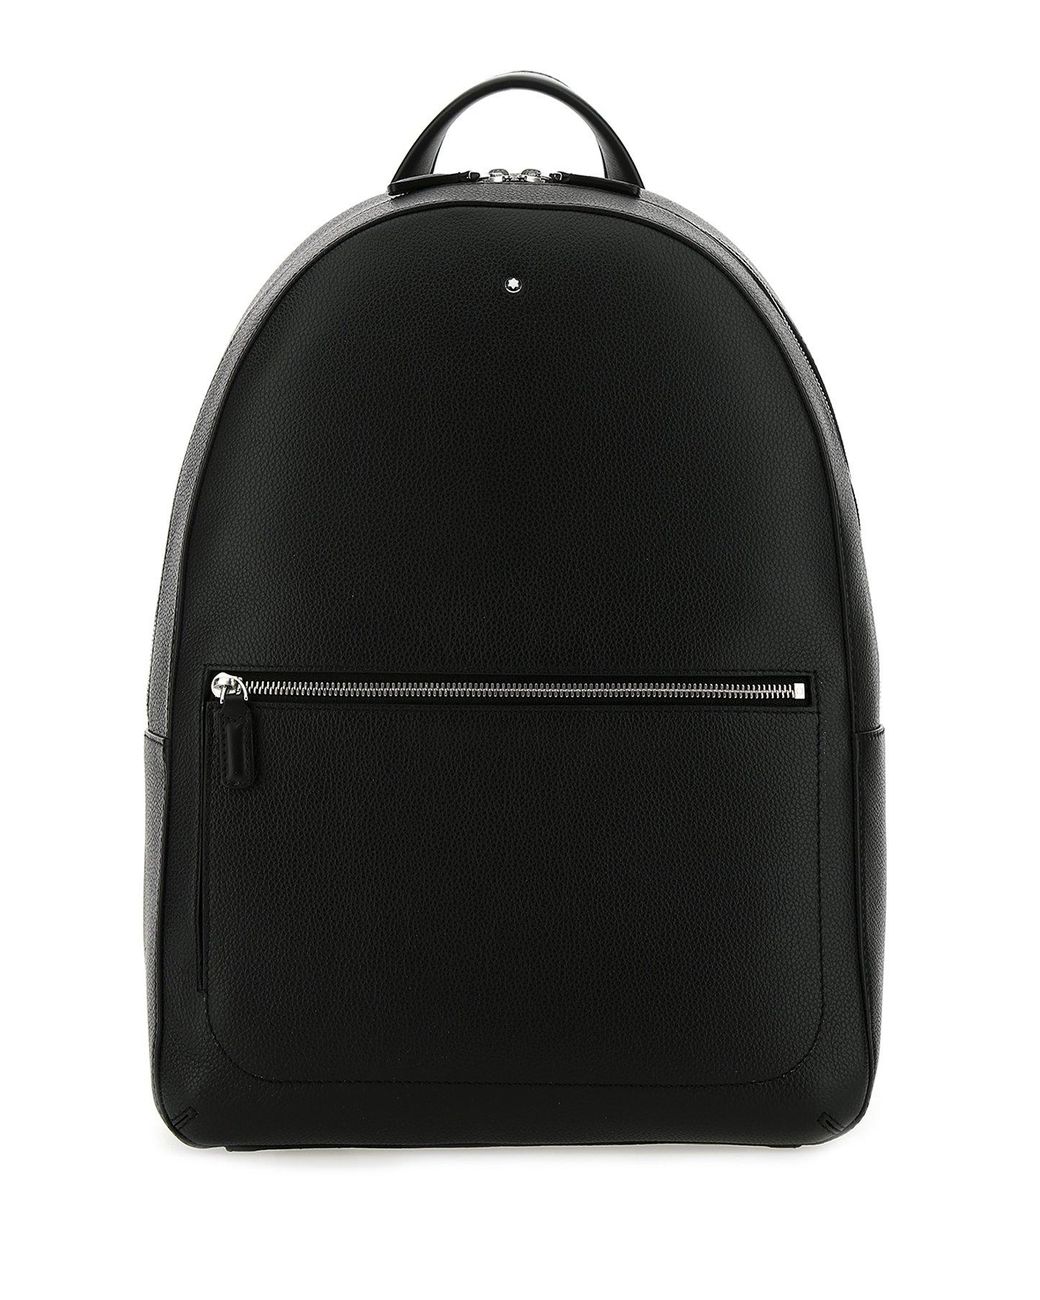 Montblanc Leather Meisterstuck Medium Backpack in Black for Men - Lyst